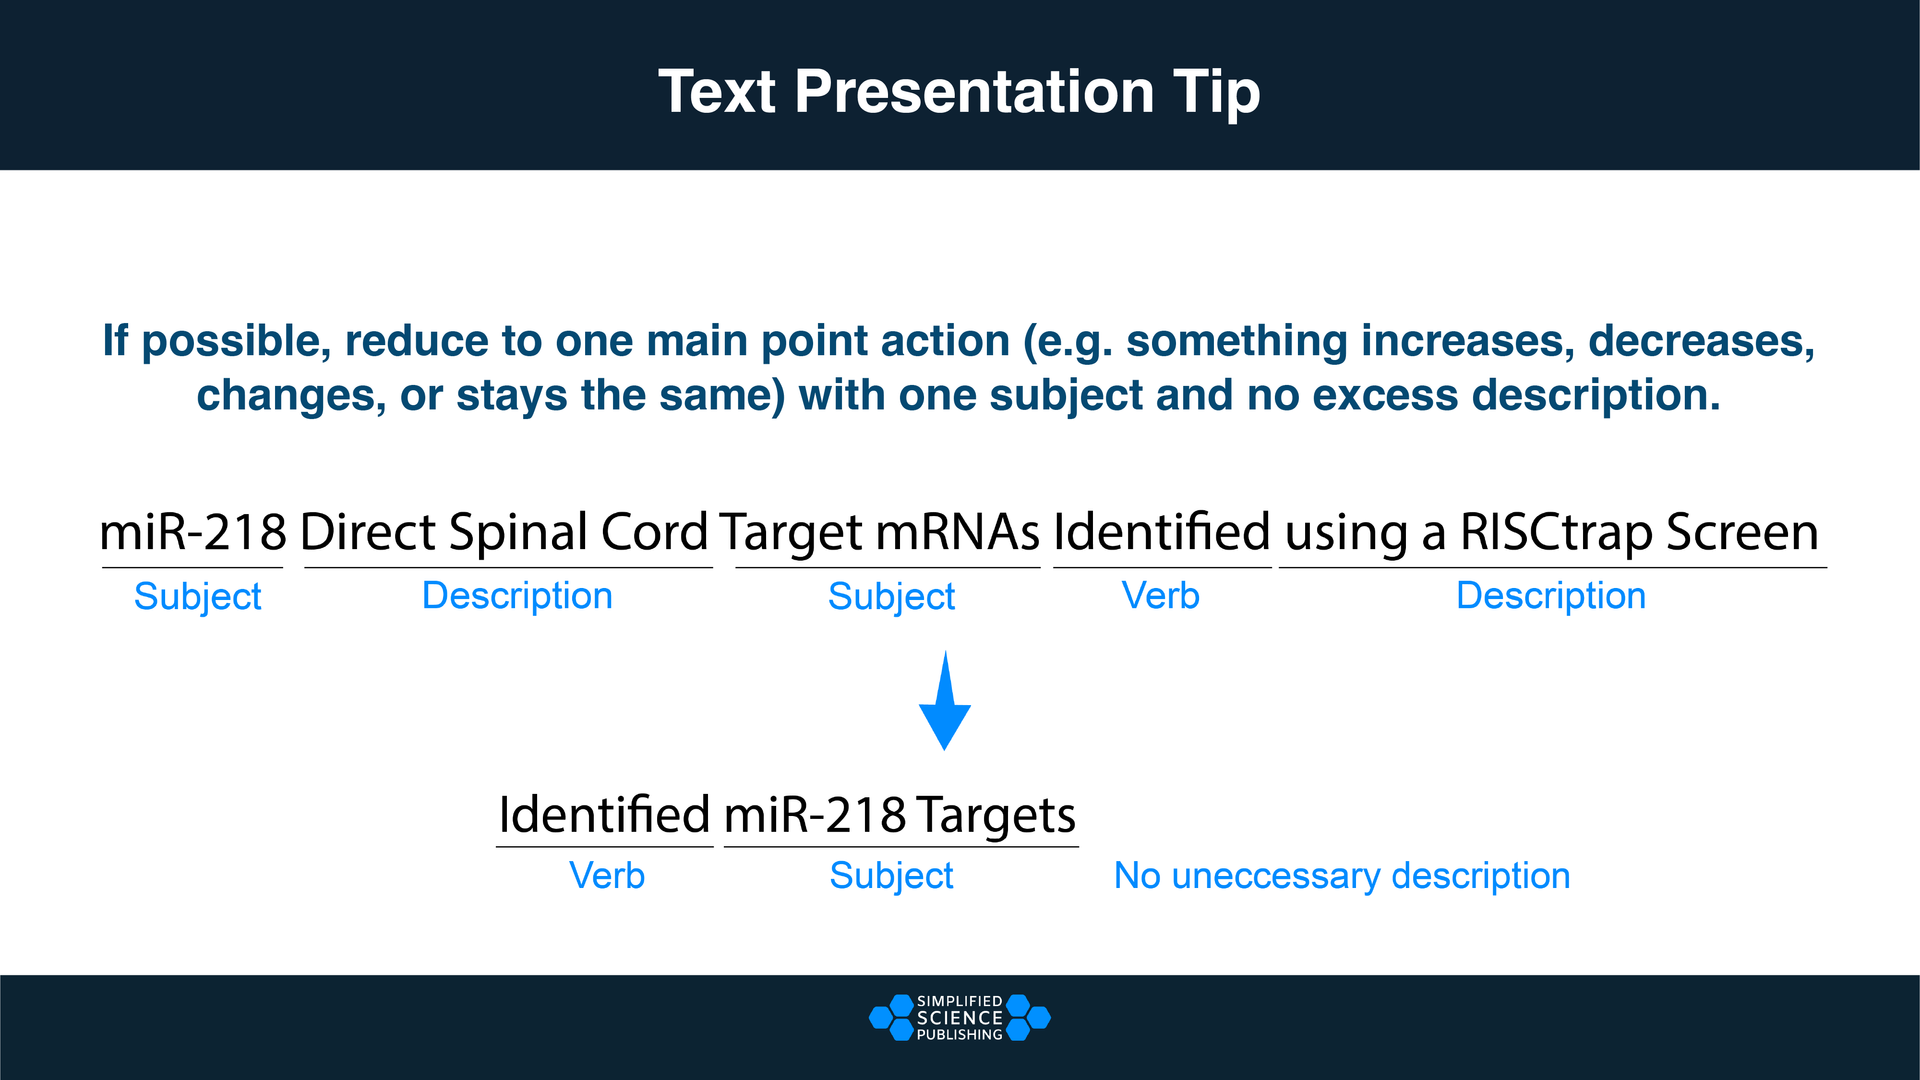 Scientific presentation text design tips